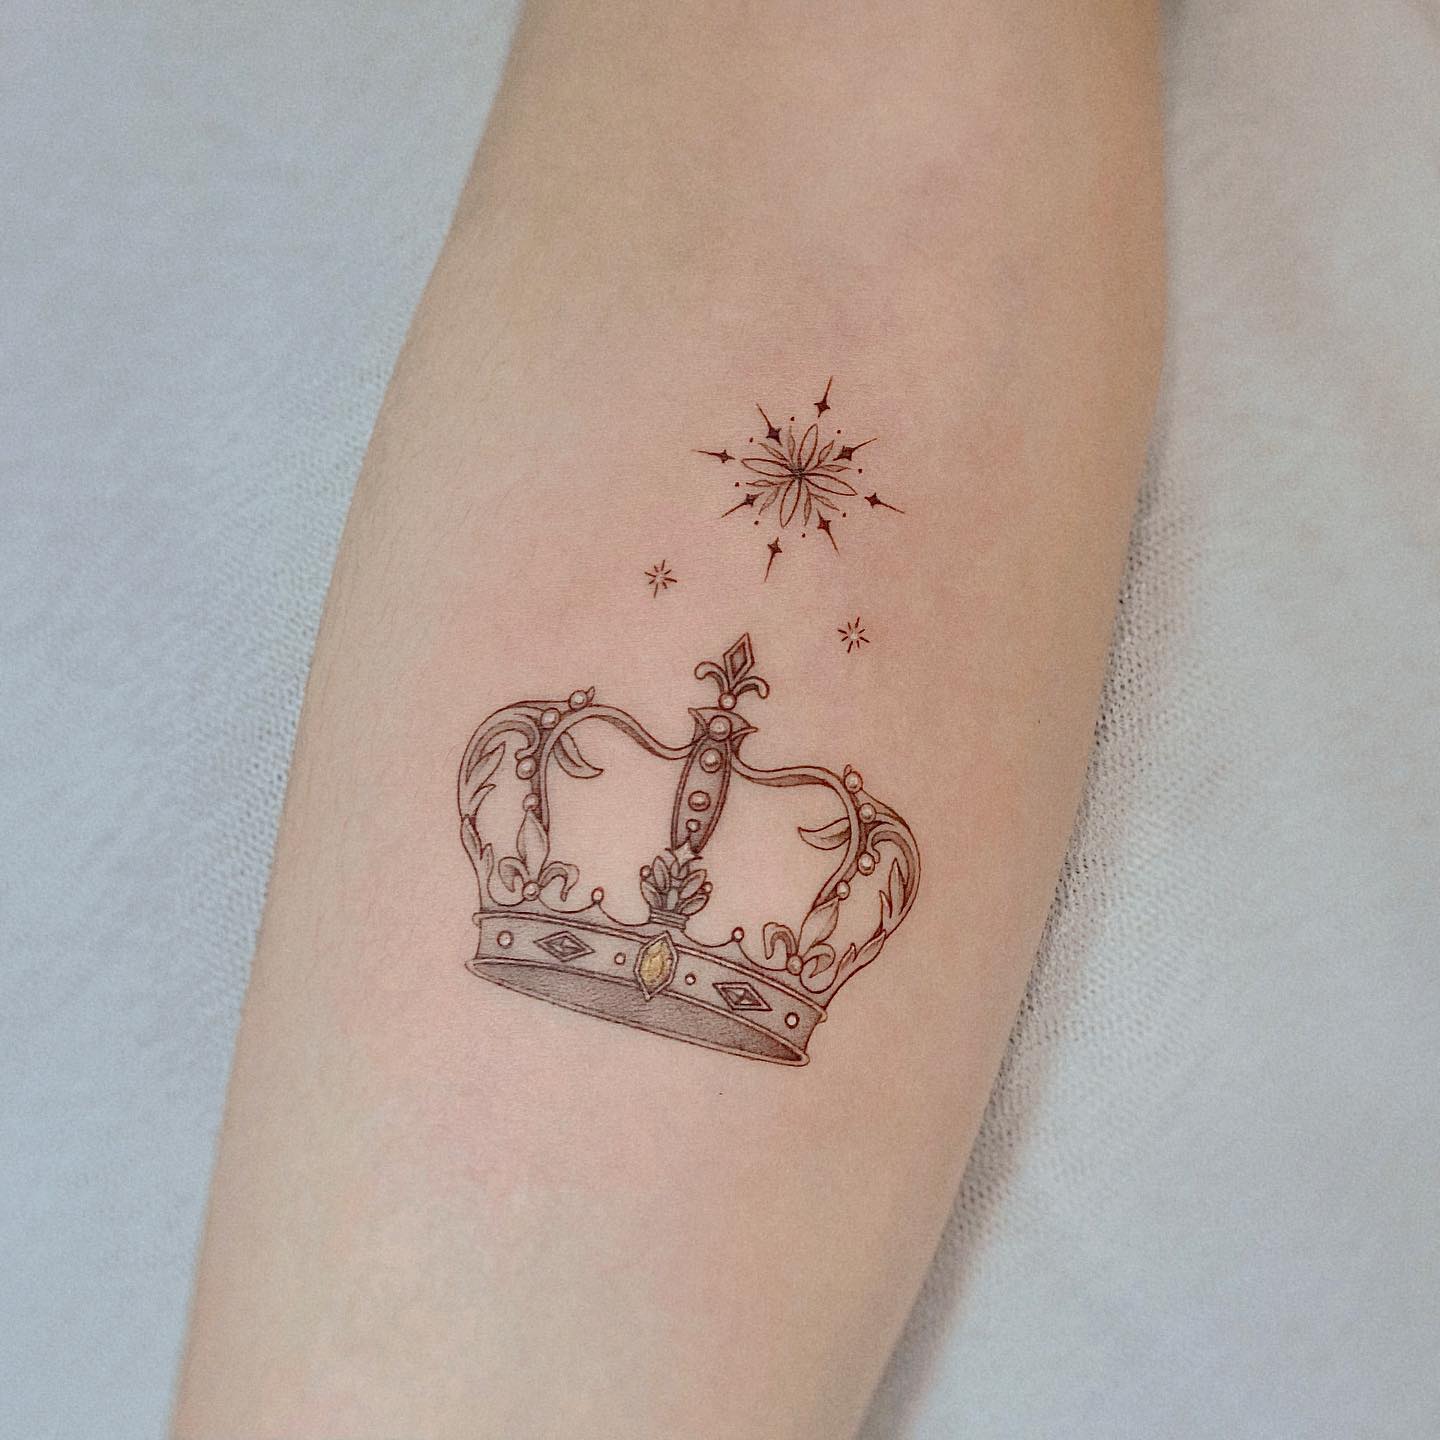 Tatuaje de corona de esquema impresionante